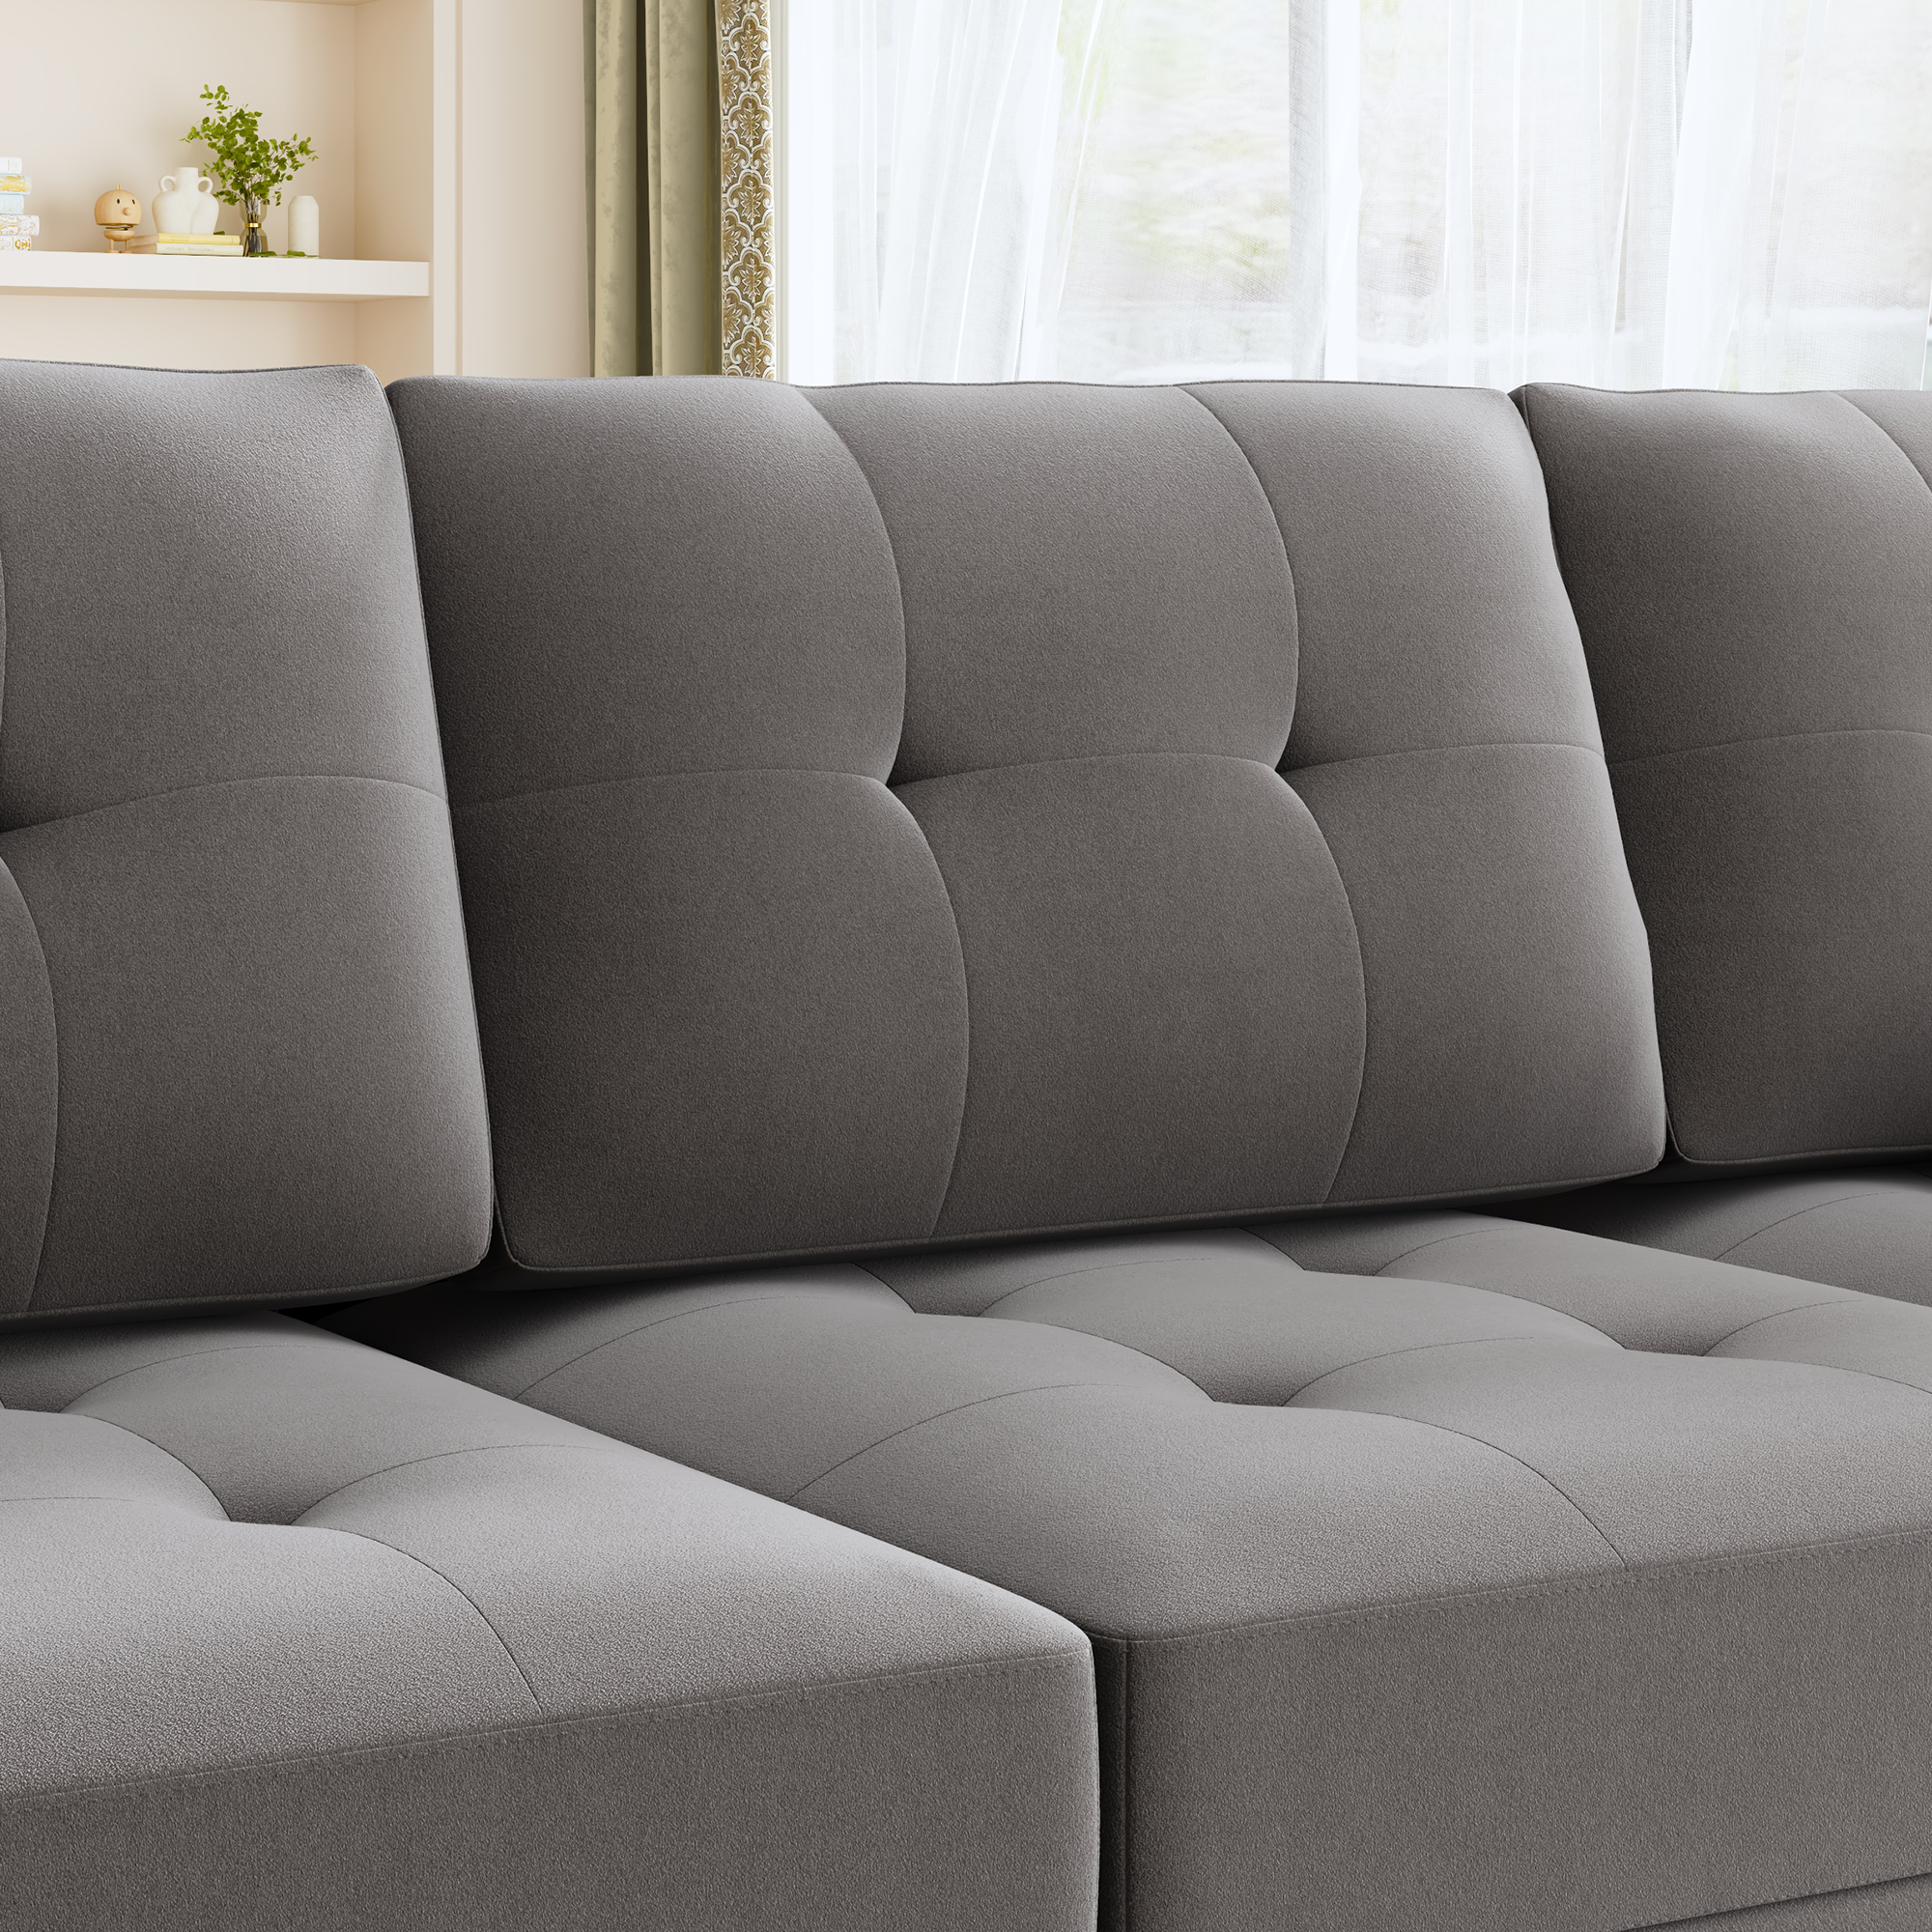 HONBAY Velvet Tufted 6-Seat U-Shaped Reversible Modular Sofa with Storage Ottoman